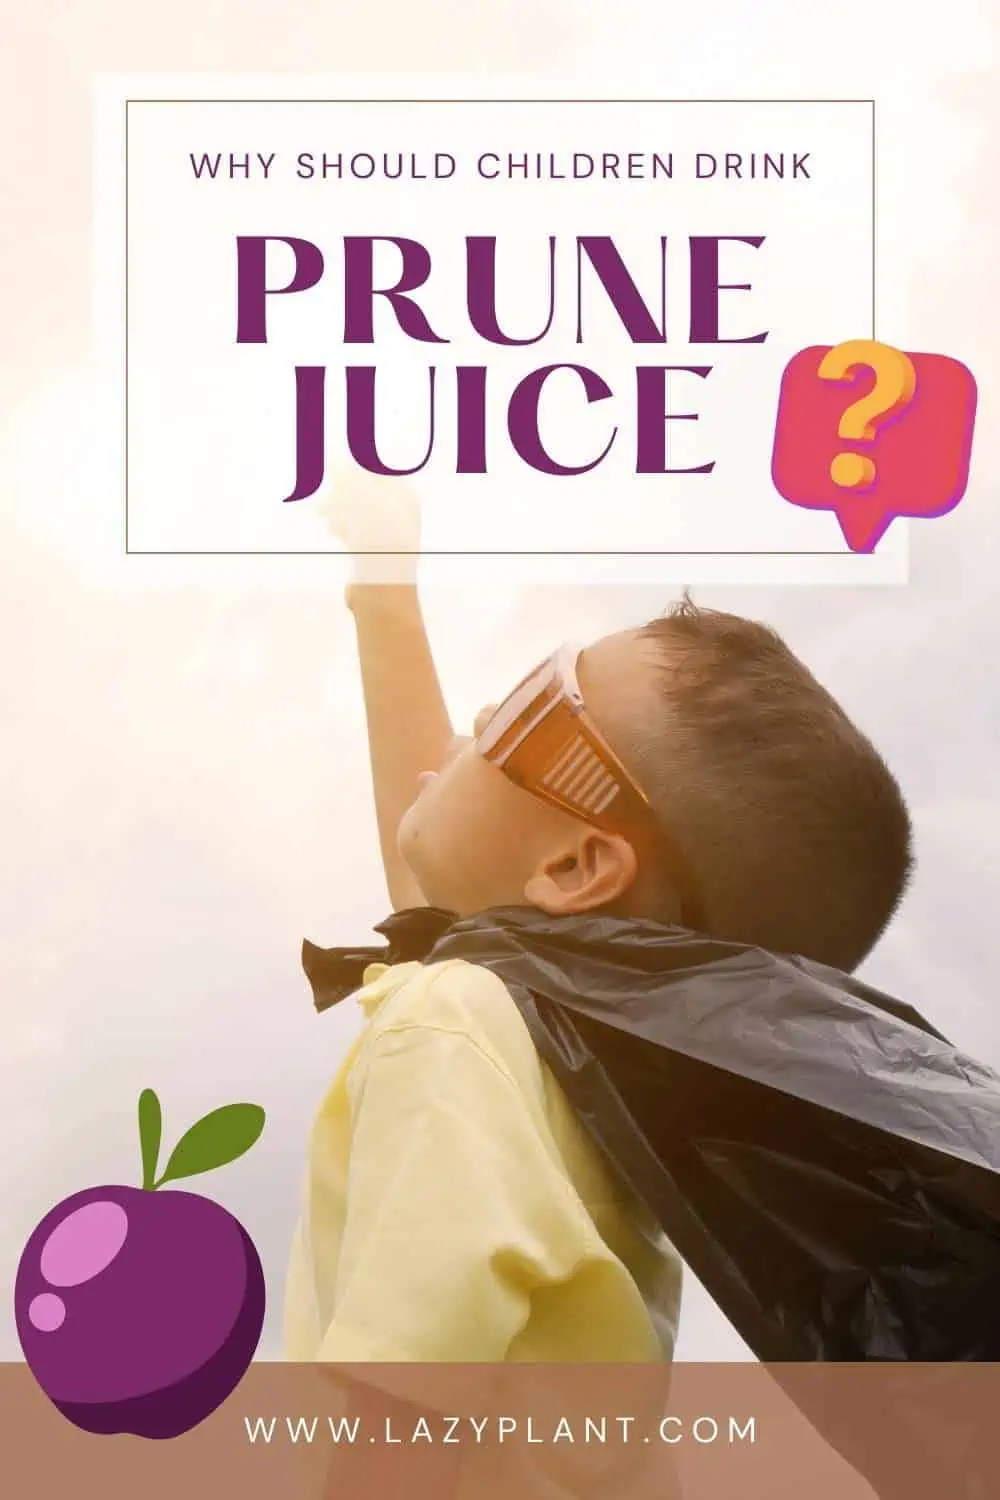 Prune juice has many benefits for children & adolescents.